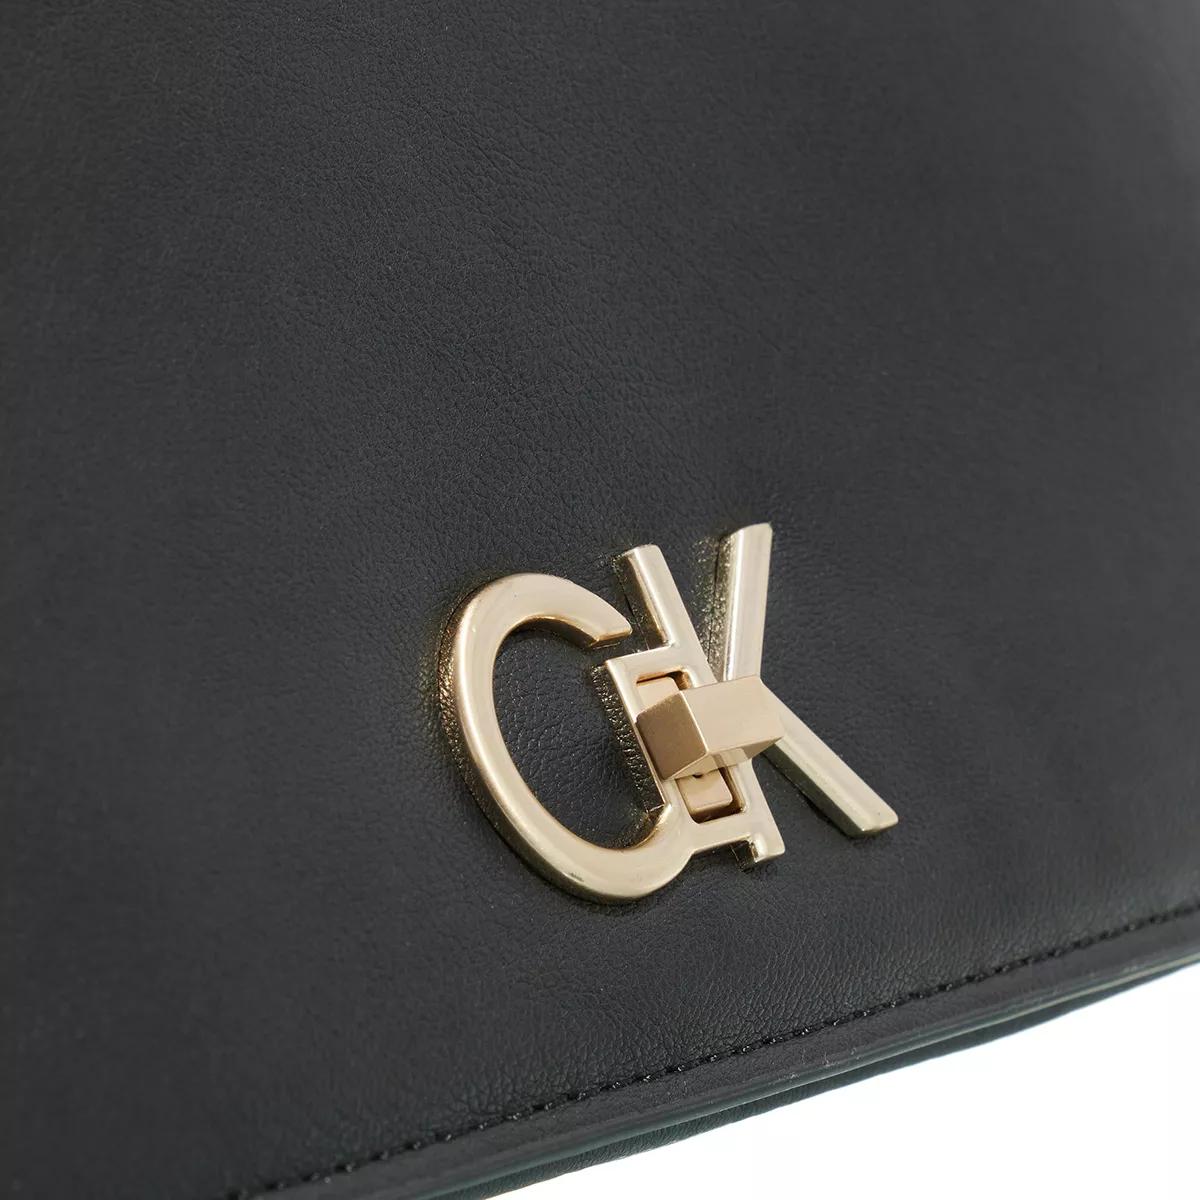 Calvin Klein Crossbody bags Re-Lock Double Gusett Xbody in zwart